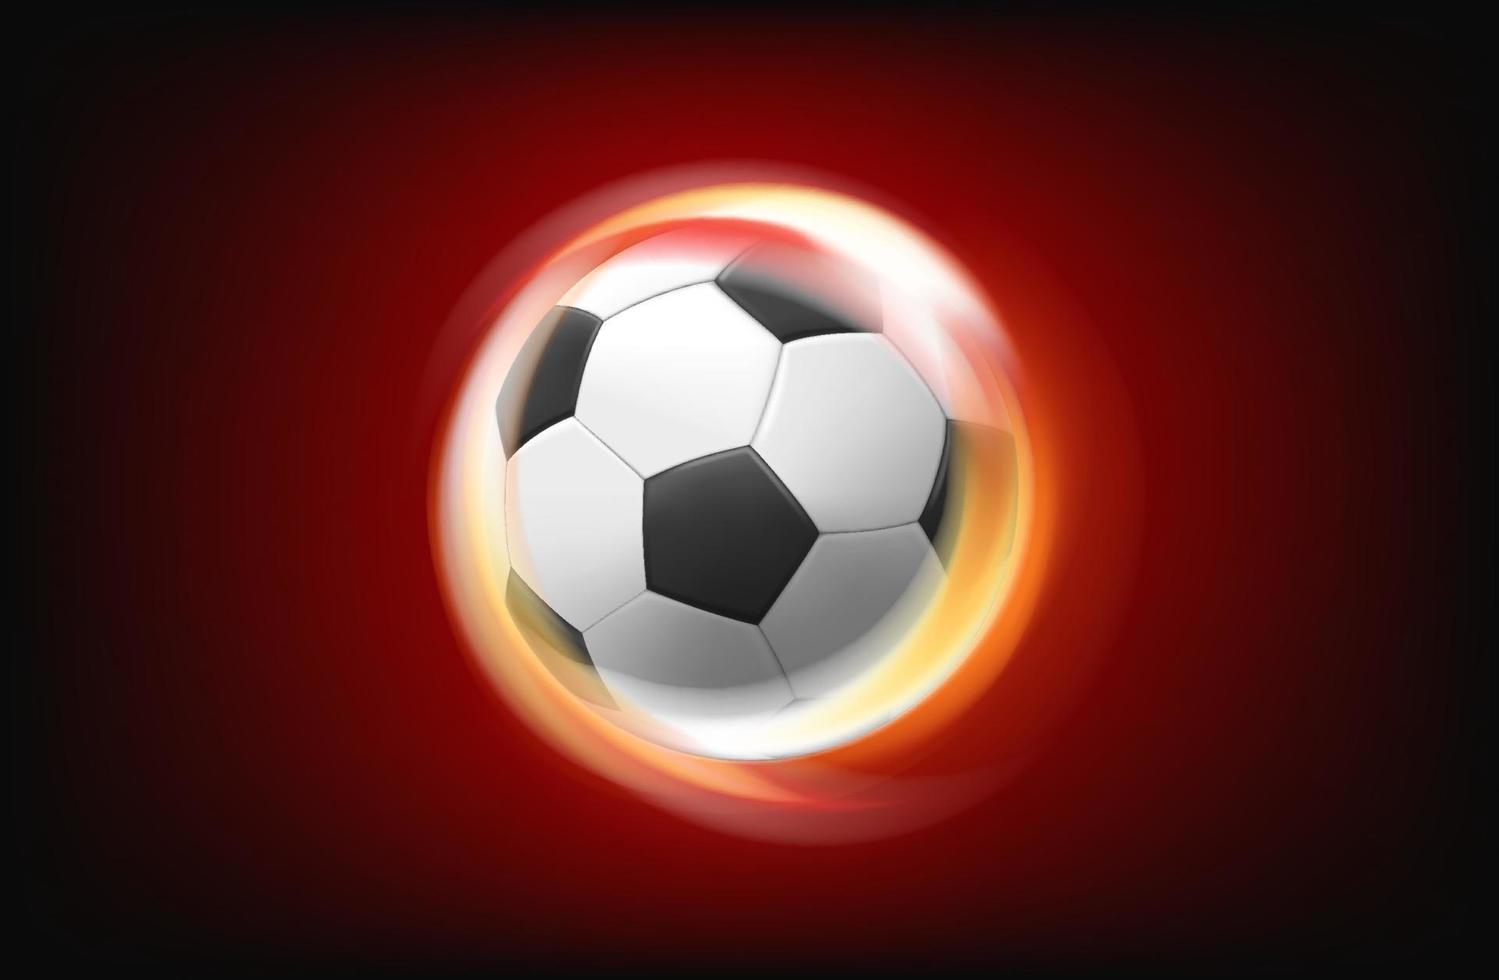 spinnen vlammend voetbal bal. 3d vector illustratie met brand effect